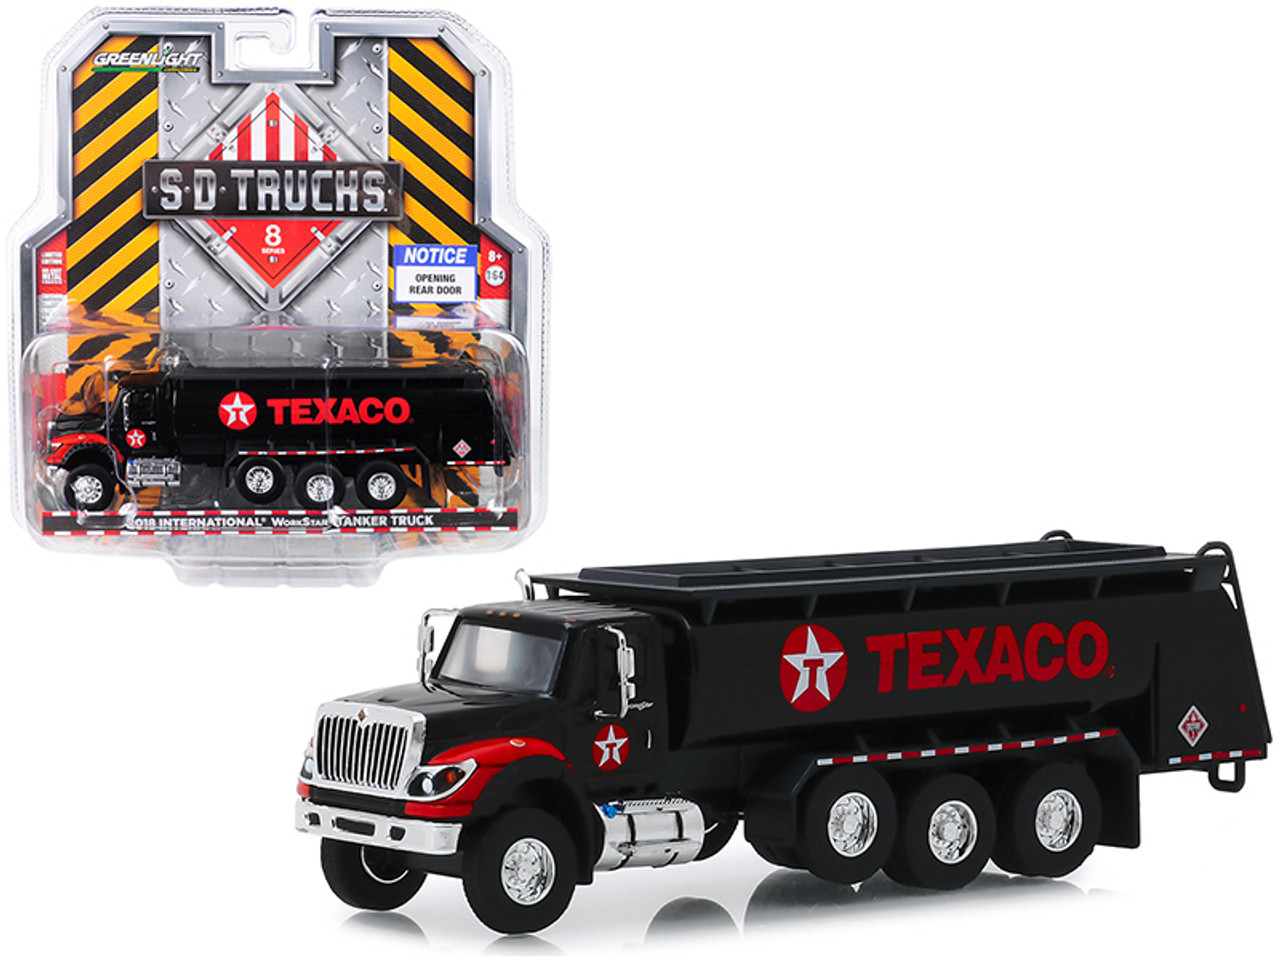 2018 International WorkStar Tanker Truck Black "Texaco" "S.D. Trucks" Series 8 1/64 Diecast Model by Greenlight